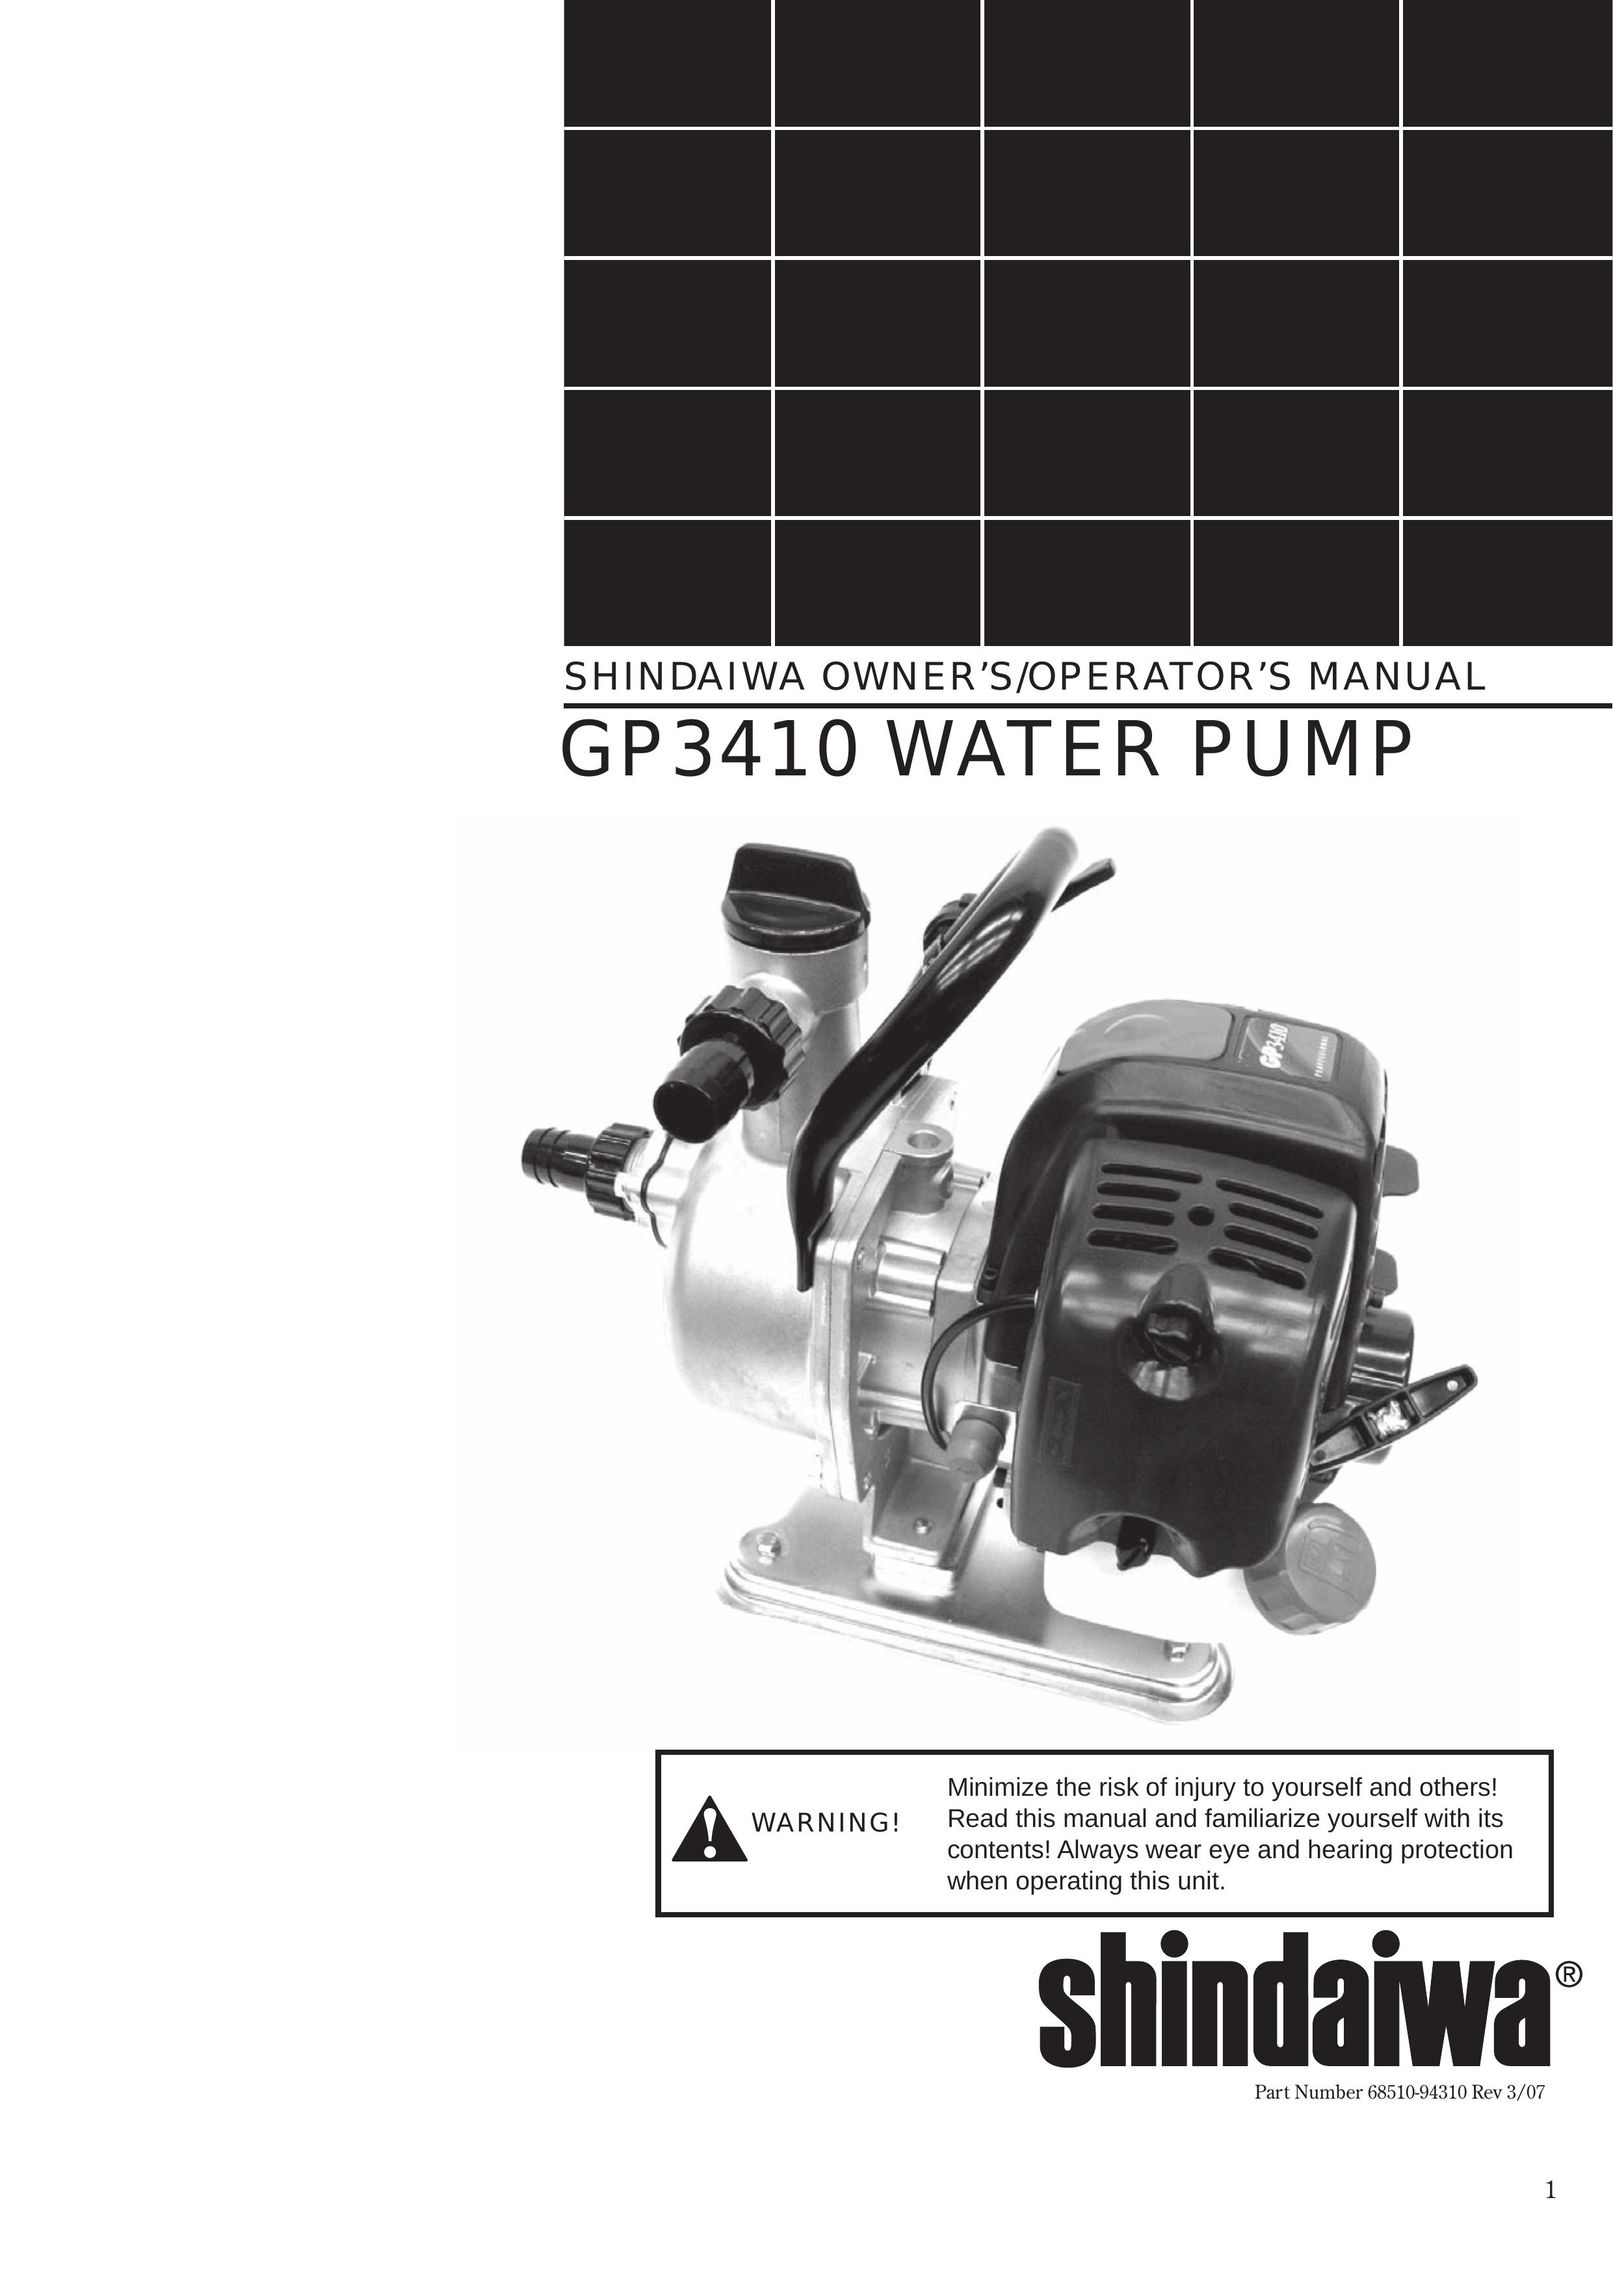 Shindaiwa GP3410 Water Pump User Manual